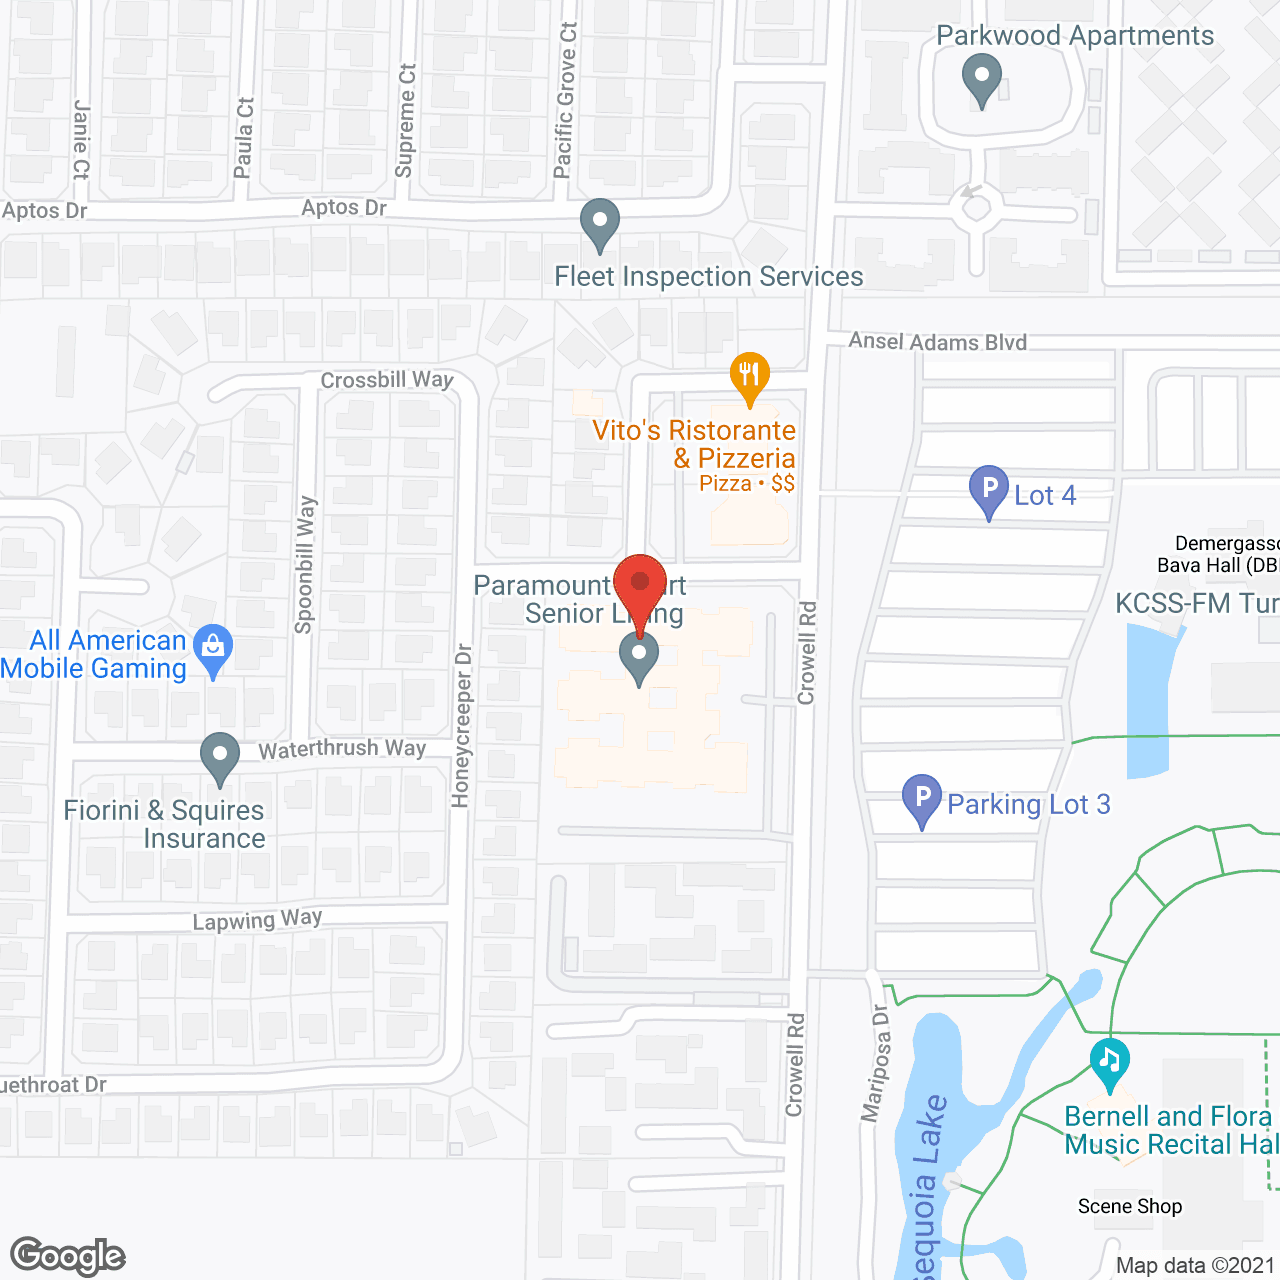 Paramount Court-DUPLICATE in google map